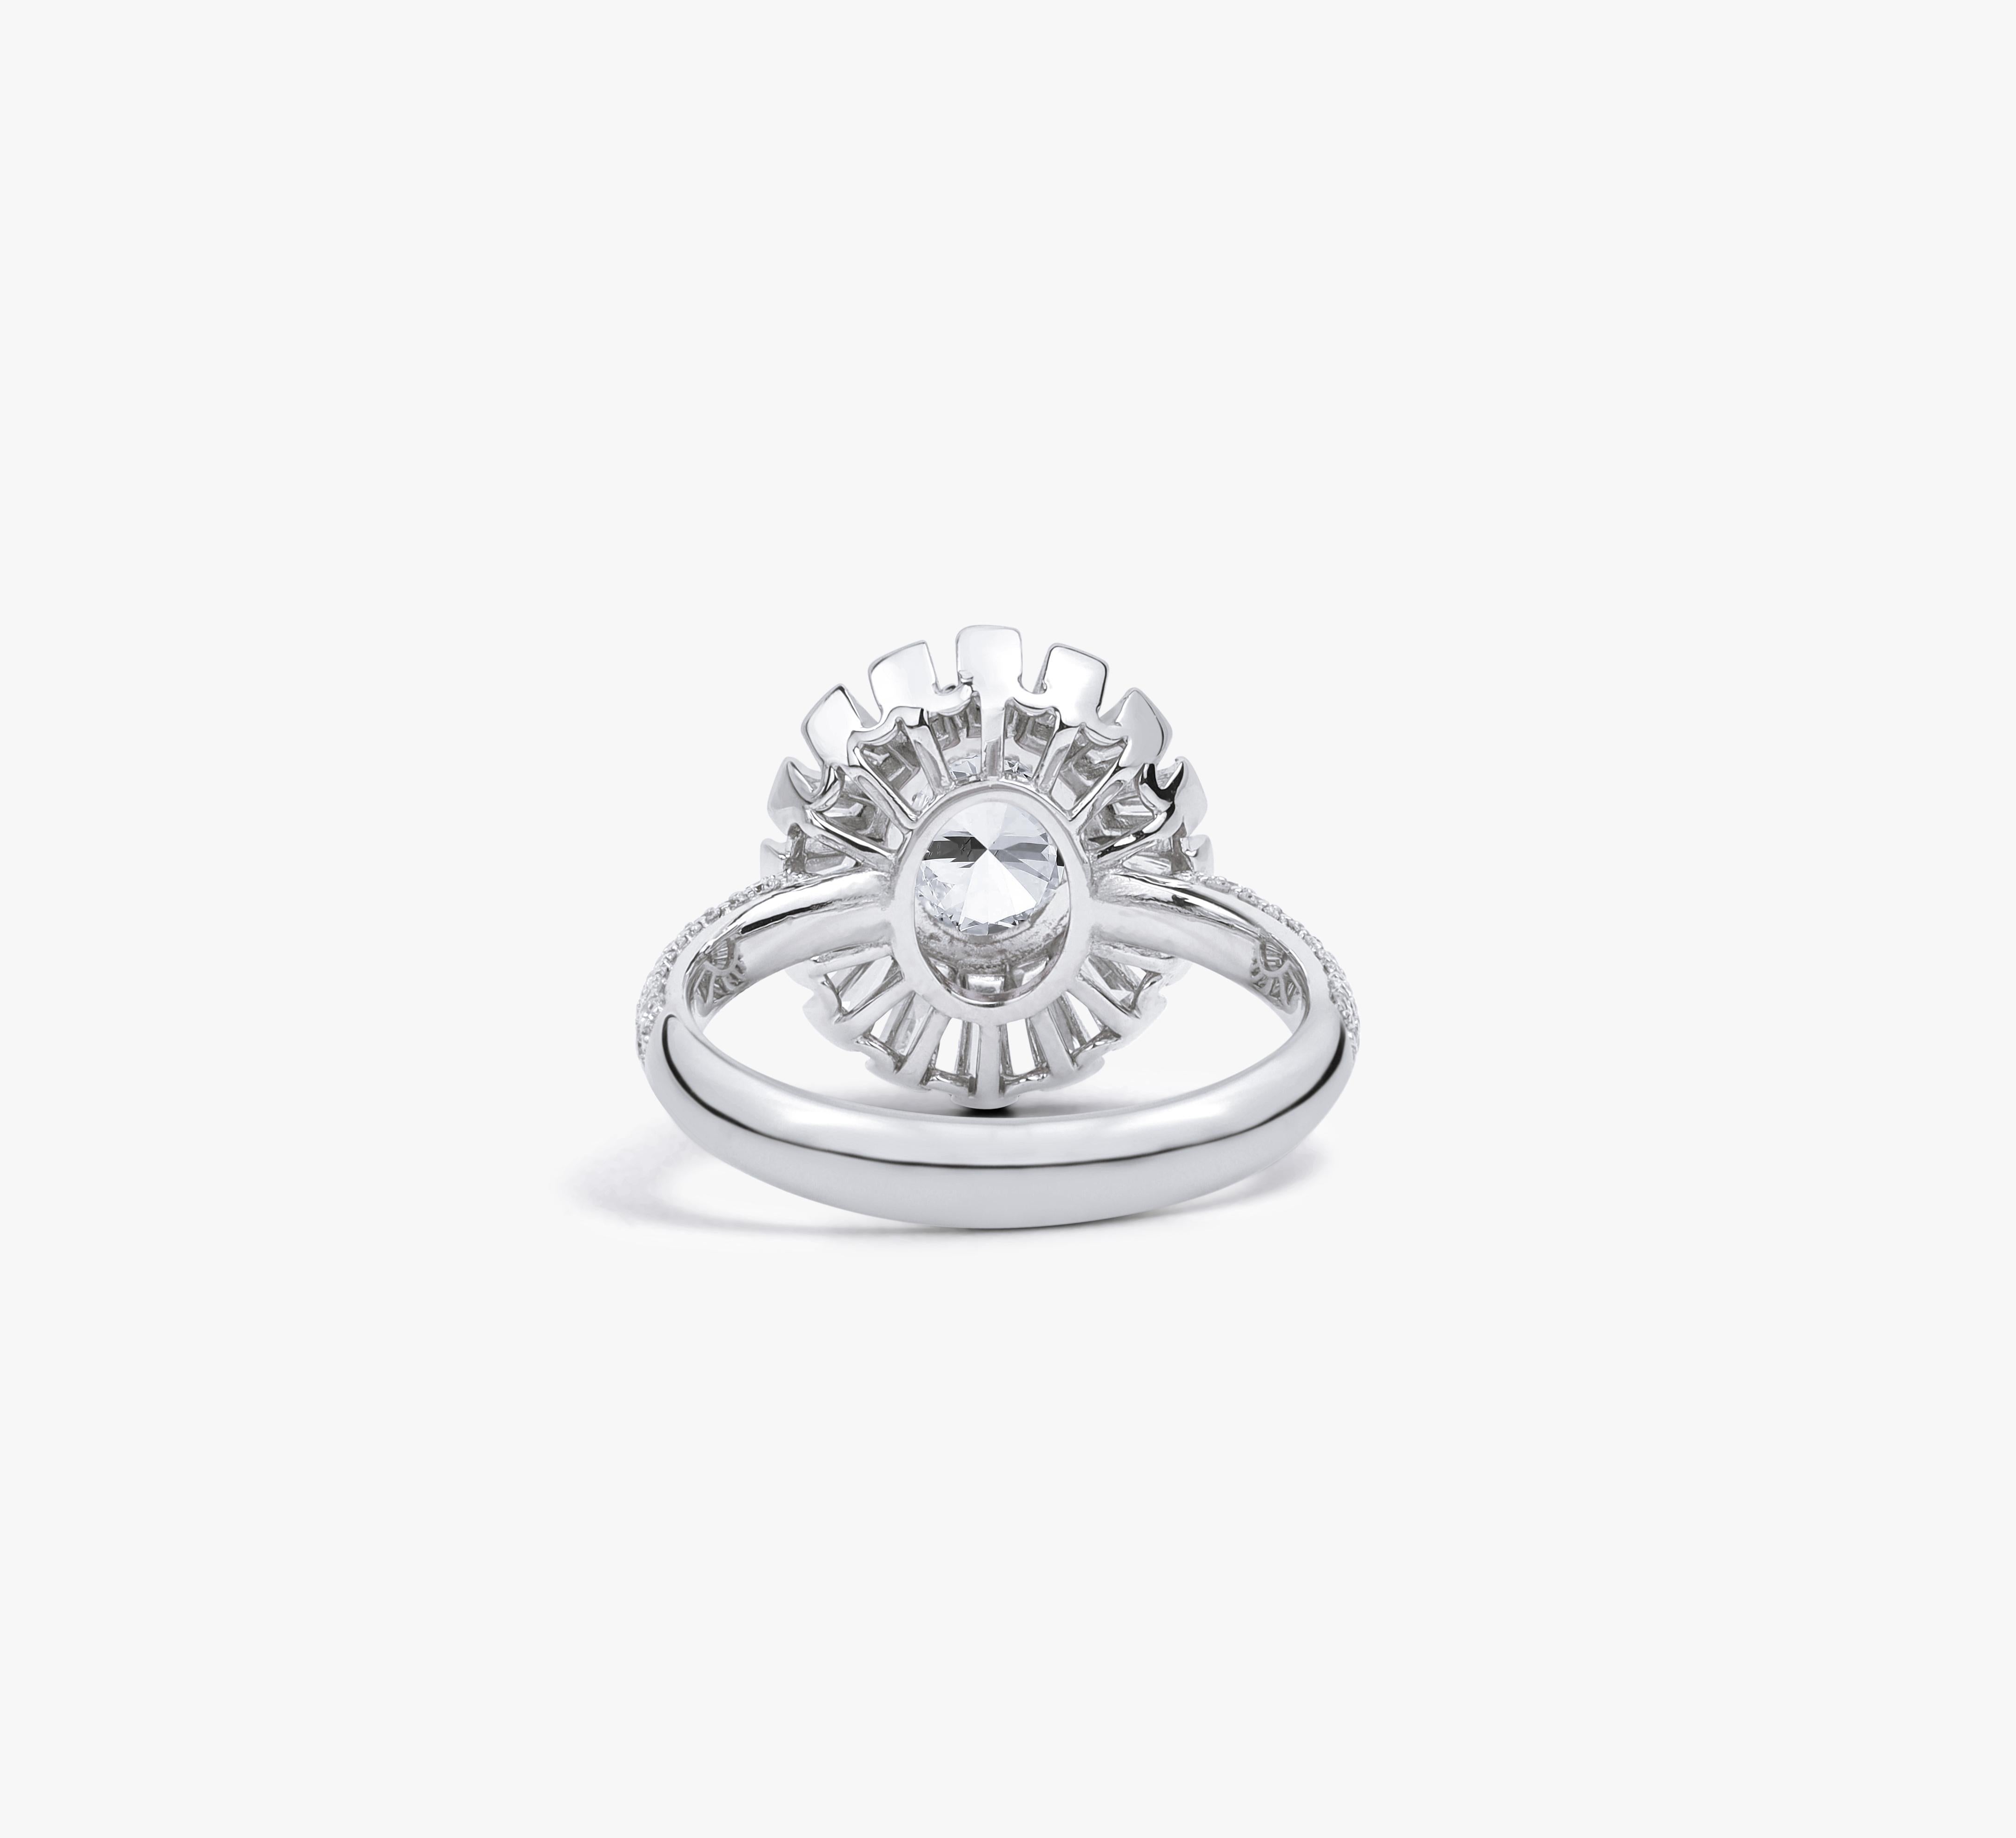 1.5 vs 2 carat oval diamond ring